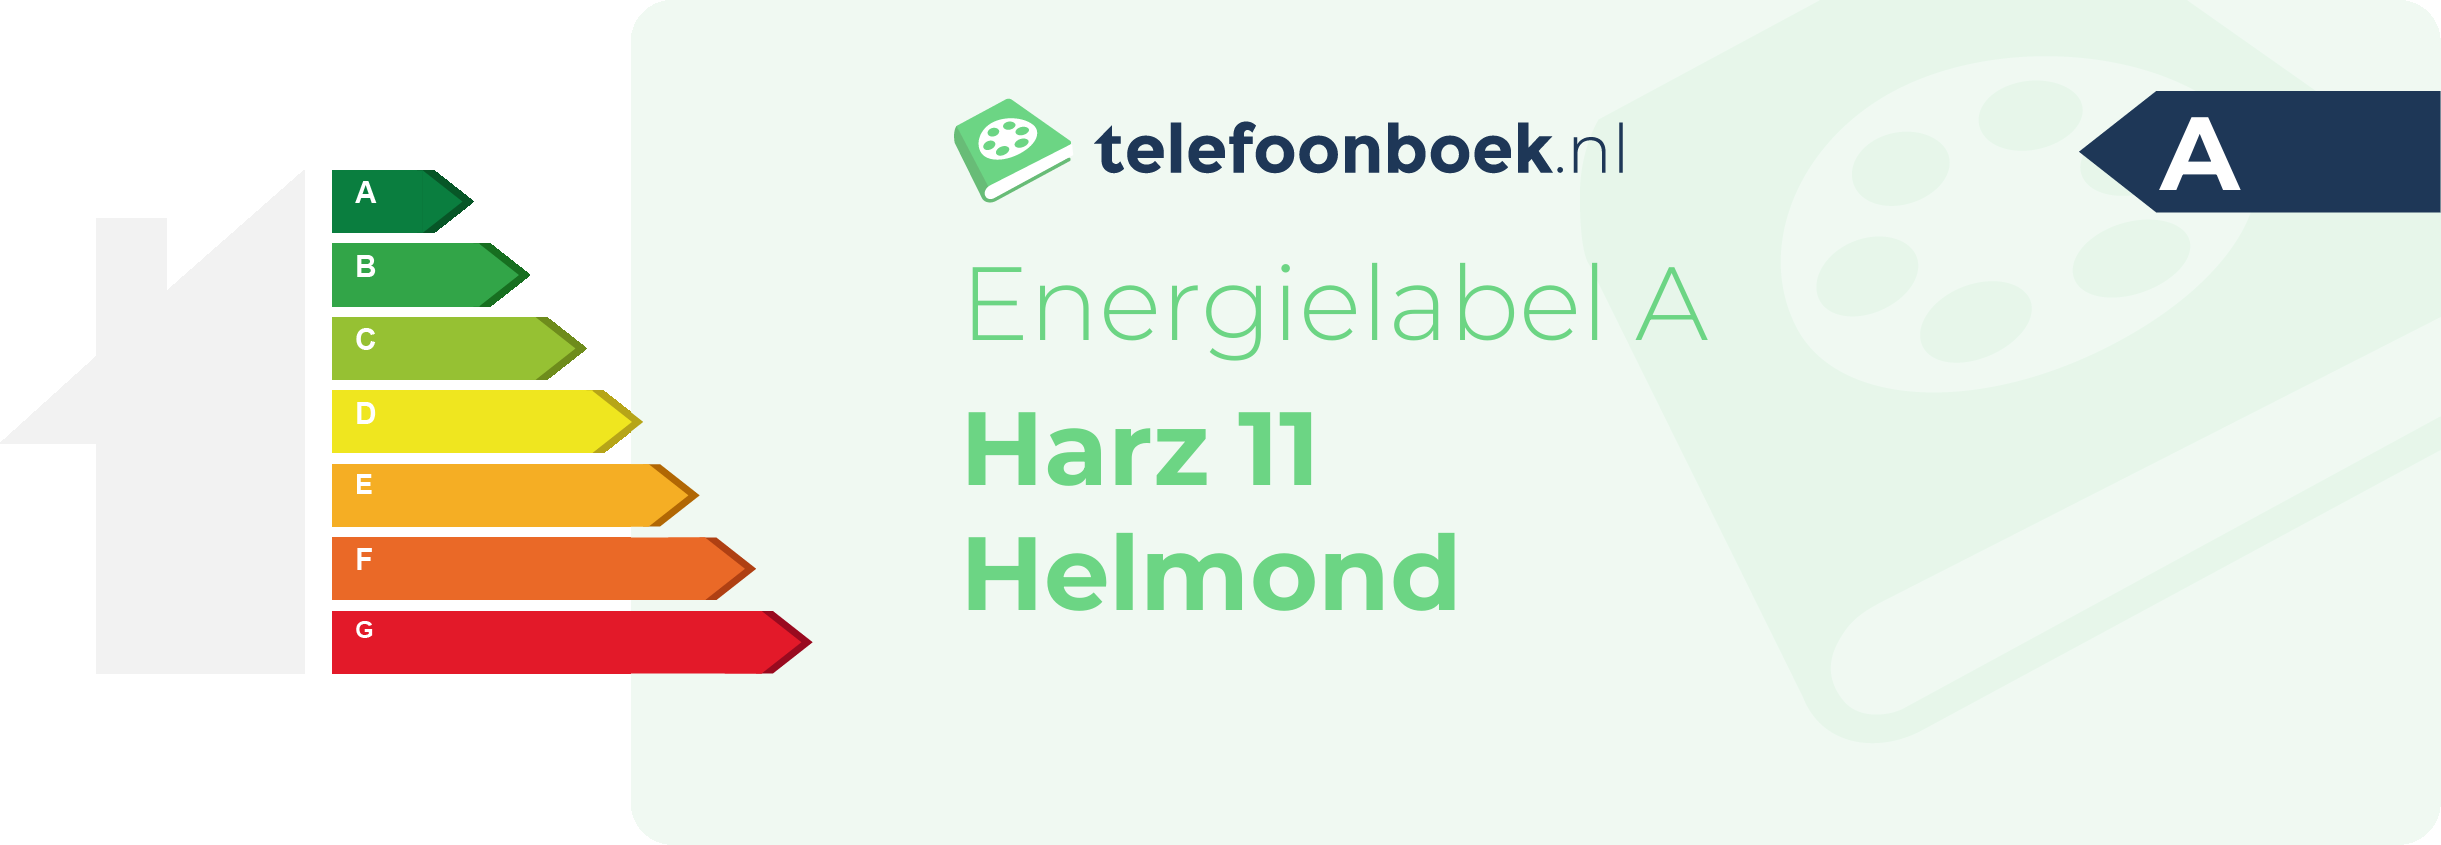 Energielabel Harz 11 Helmond